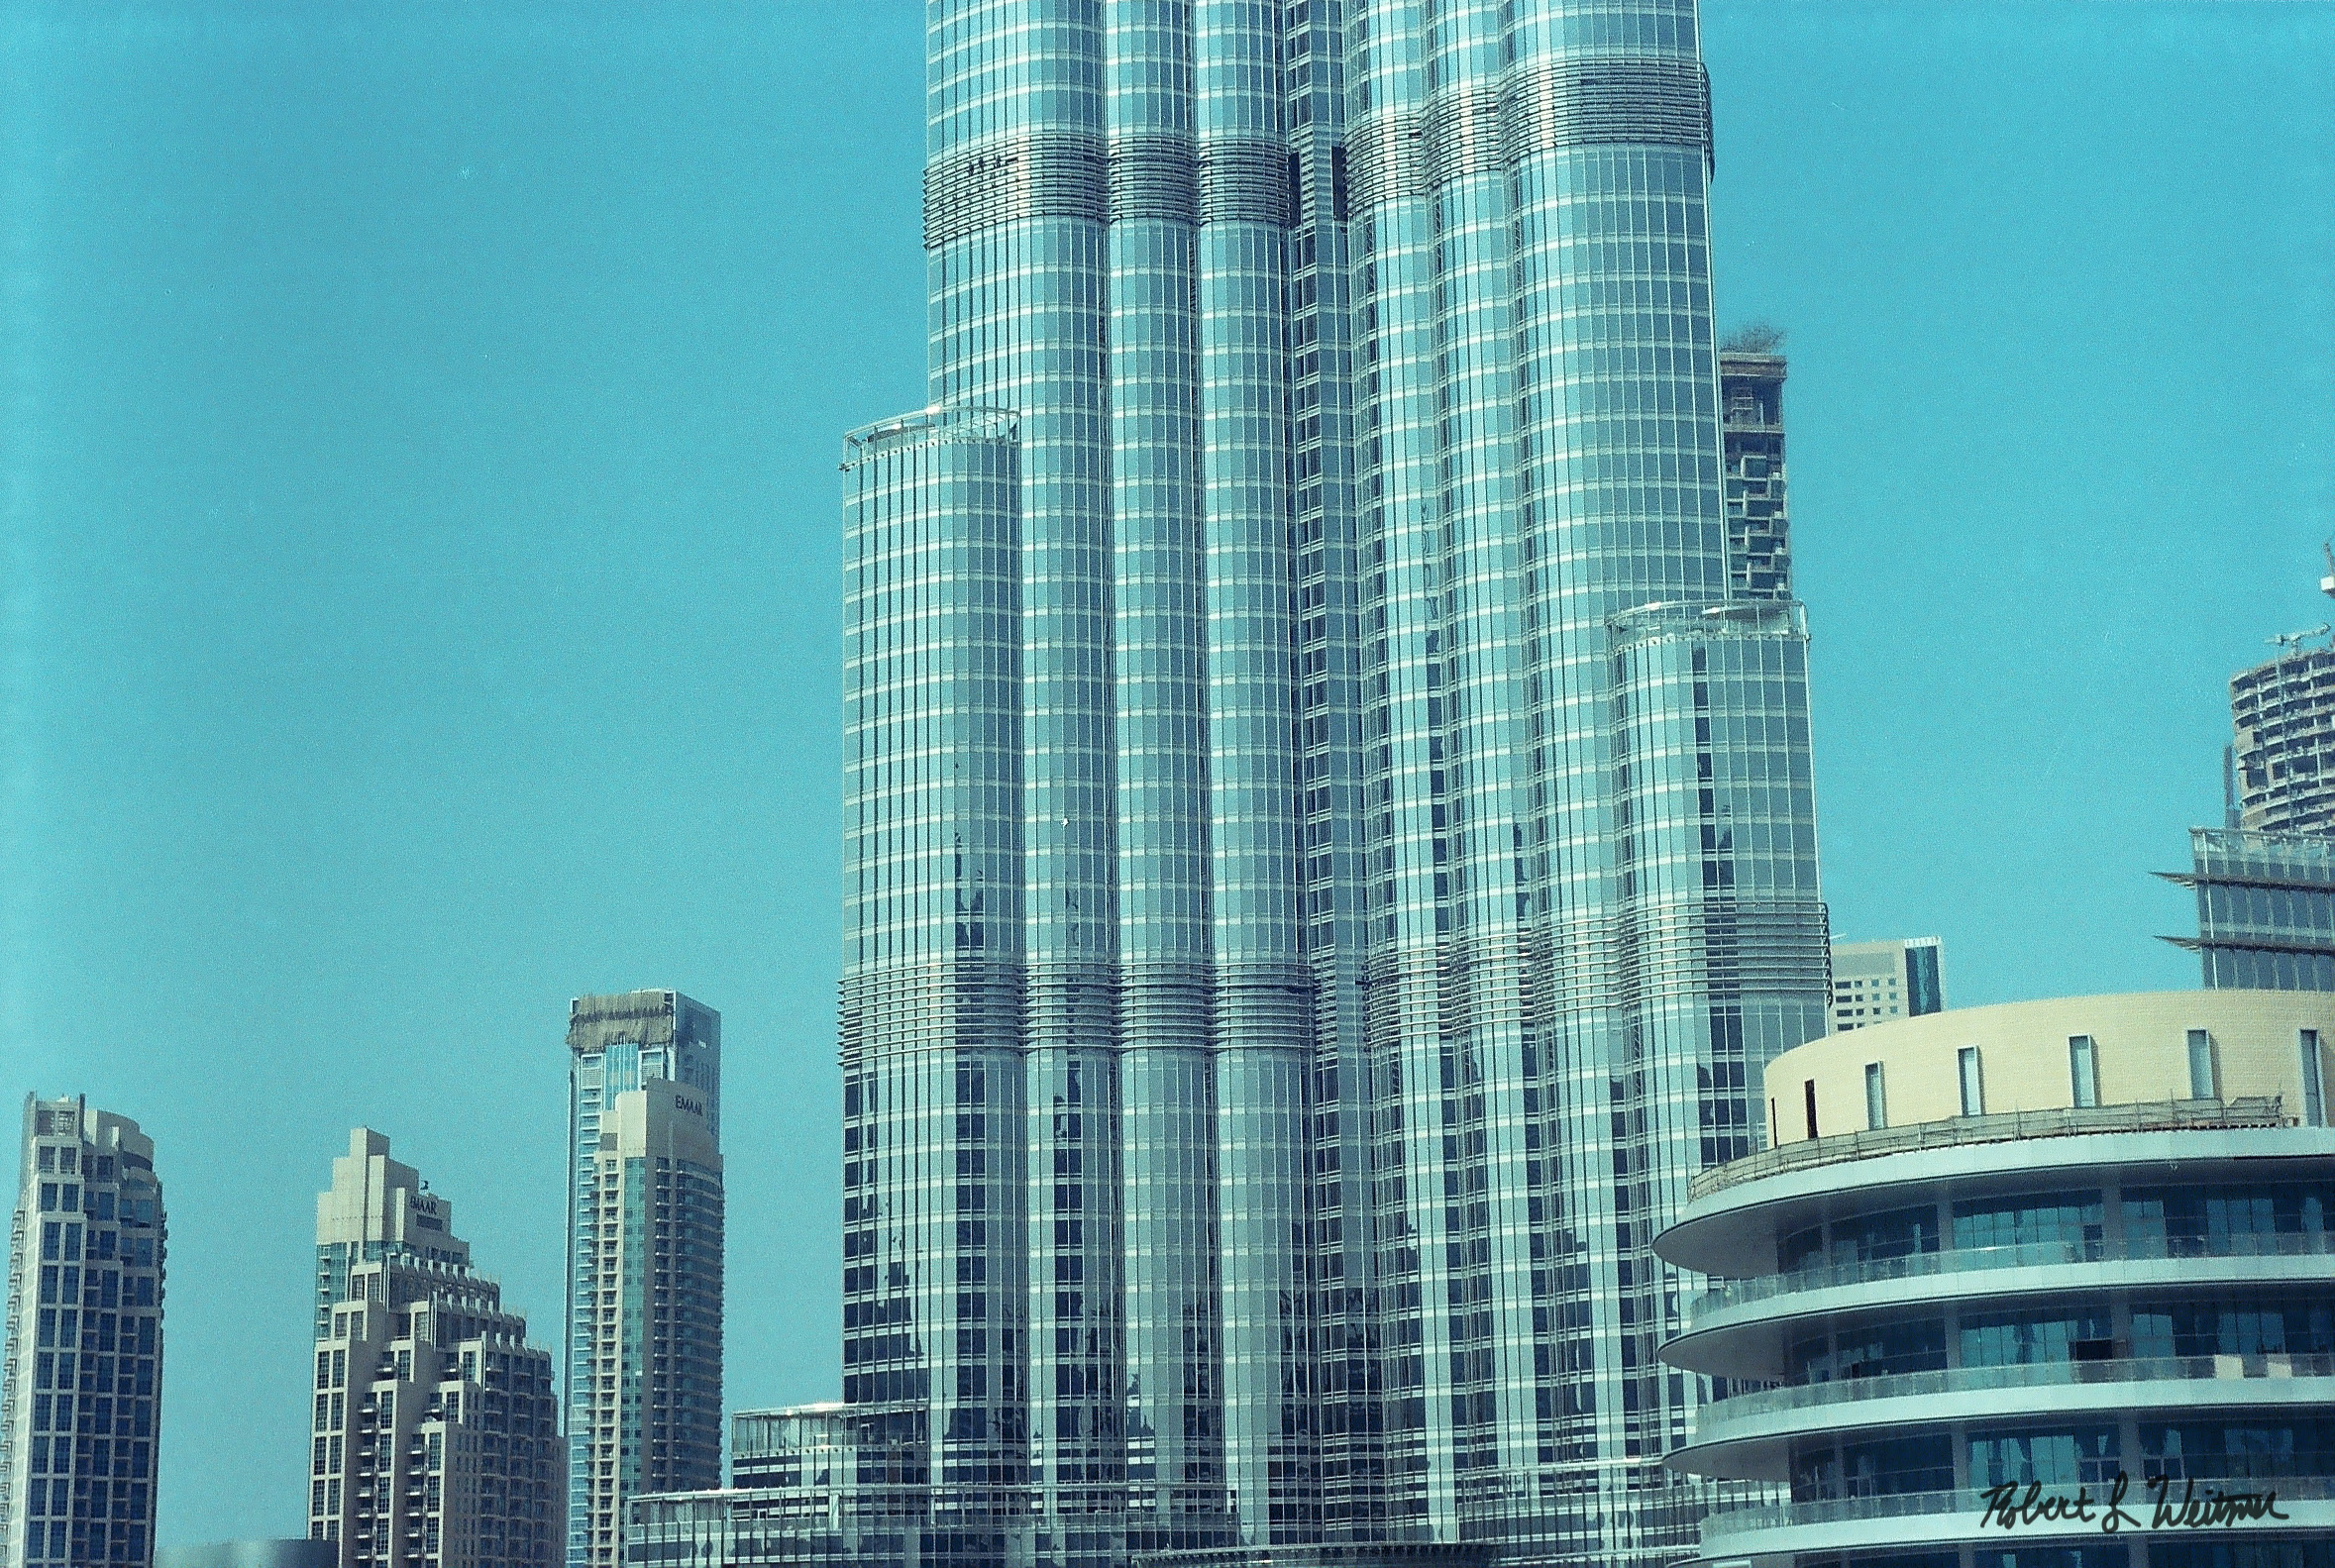 Dubai, United Arab Emirates | Zorki 4K & Kodak Portra 400 | Robert Weitzner 2017